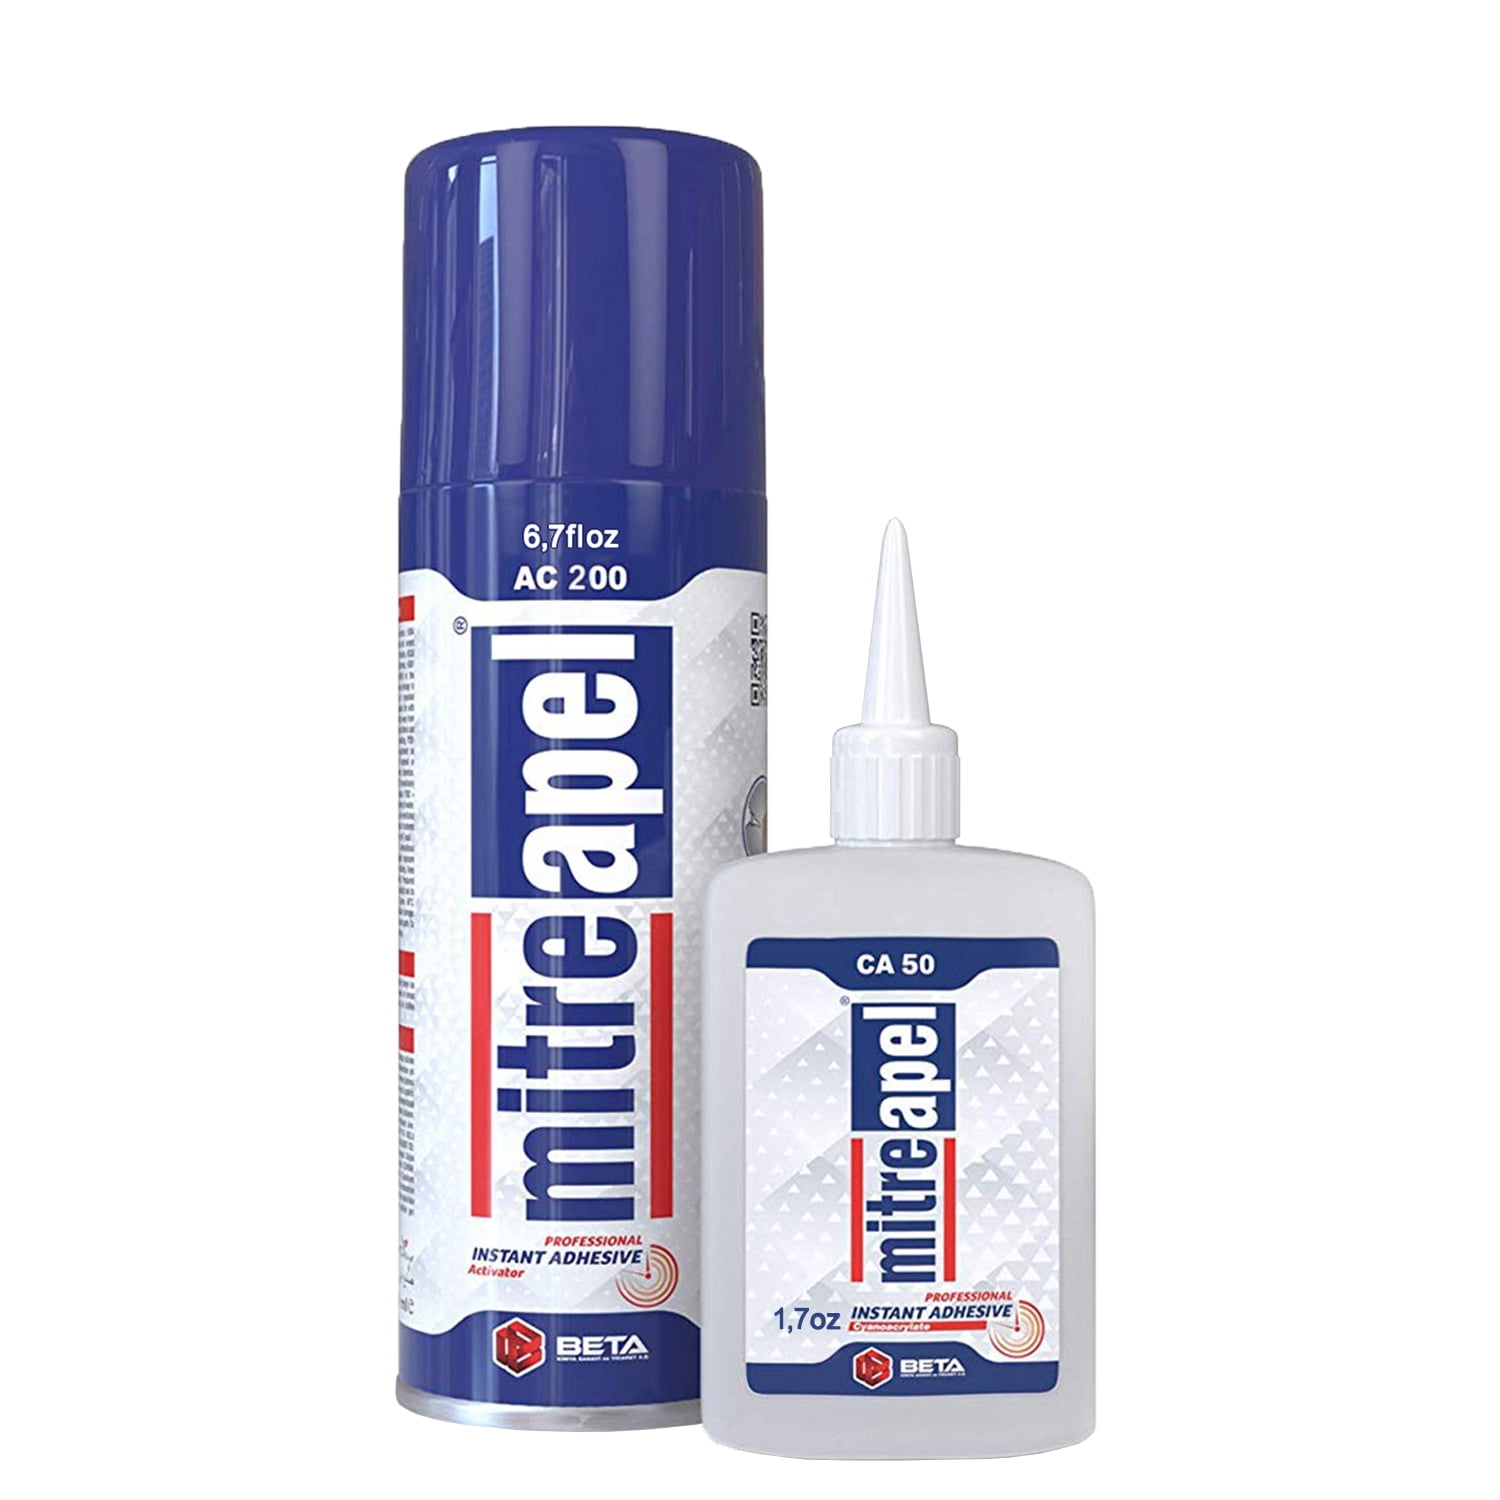 Mitreapel Autobond Super CA Glue (1.4 oz) with Spray Adhesive Activator (6.7 fl oz)-Auto Parts Cyanoacrylate Glue Great for Auto Modification Parts